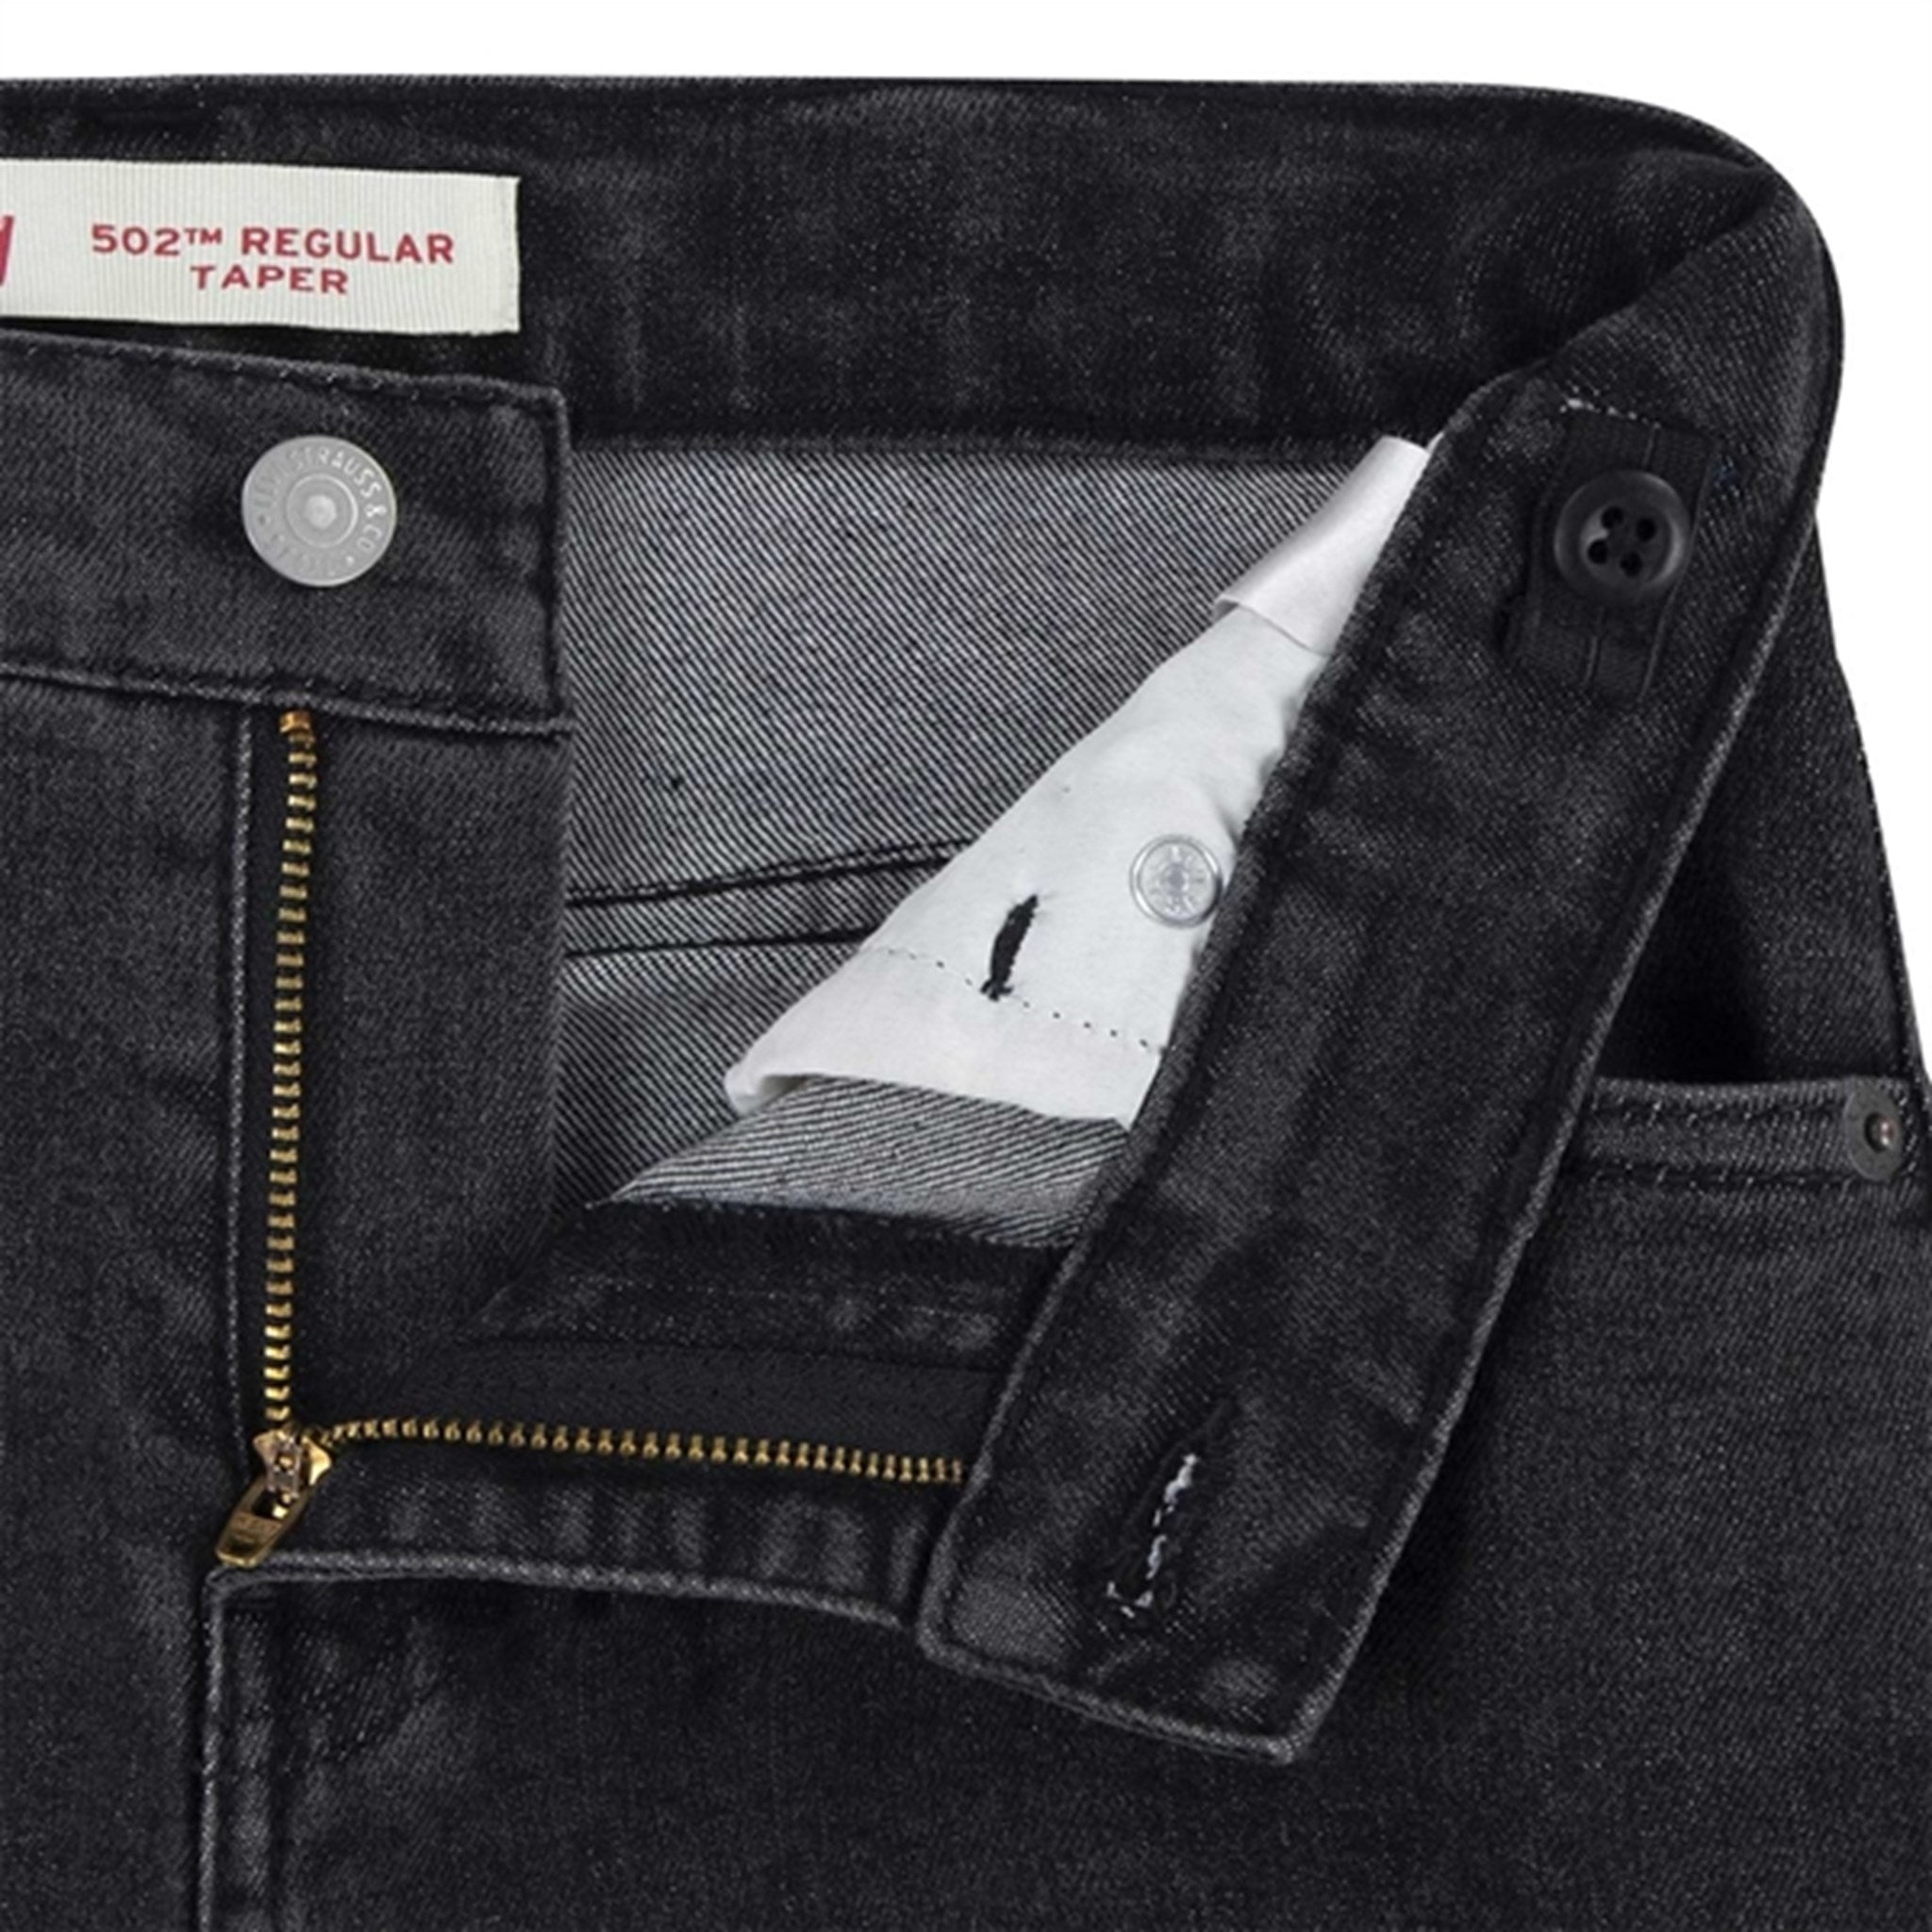 Levi's 502™ Regular Fit Tapered Jeans Finish Line 5